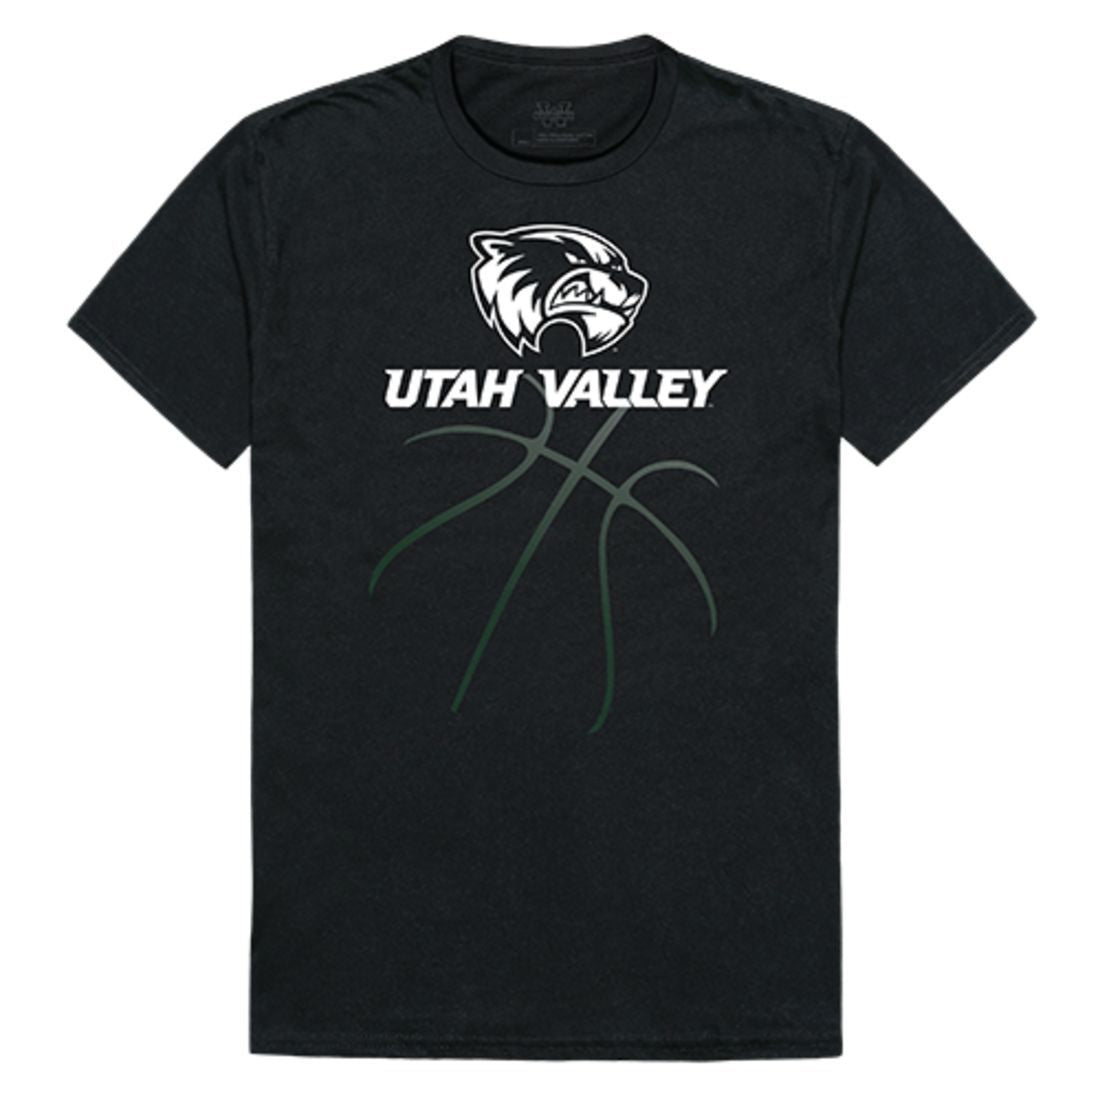 UVU Utah Valley University Wolverines Basketball T-Shirt Black-Campus-Wardrobe